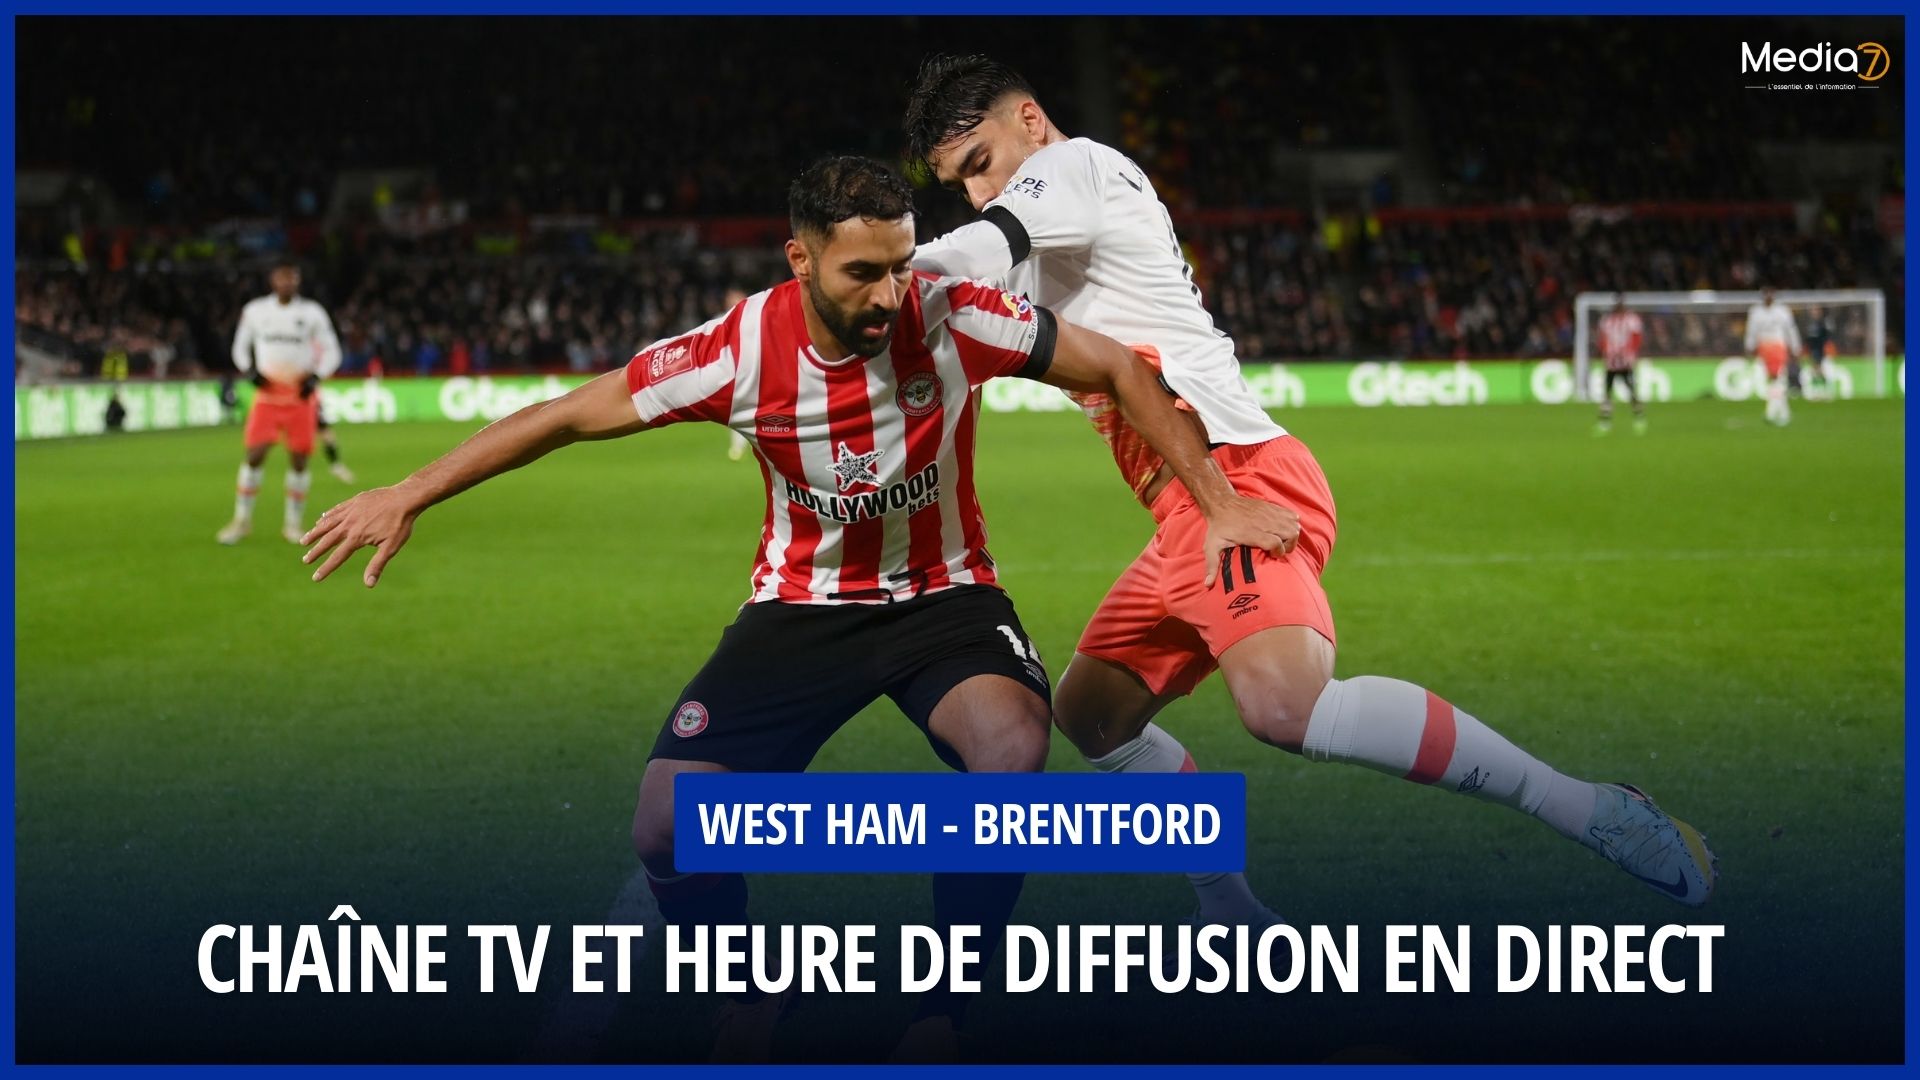 West Ham - Brentford match live: TV channel and broadcast time - Media7